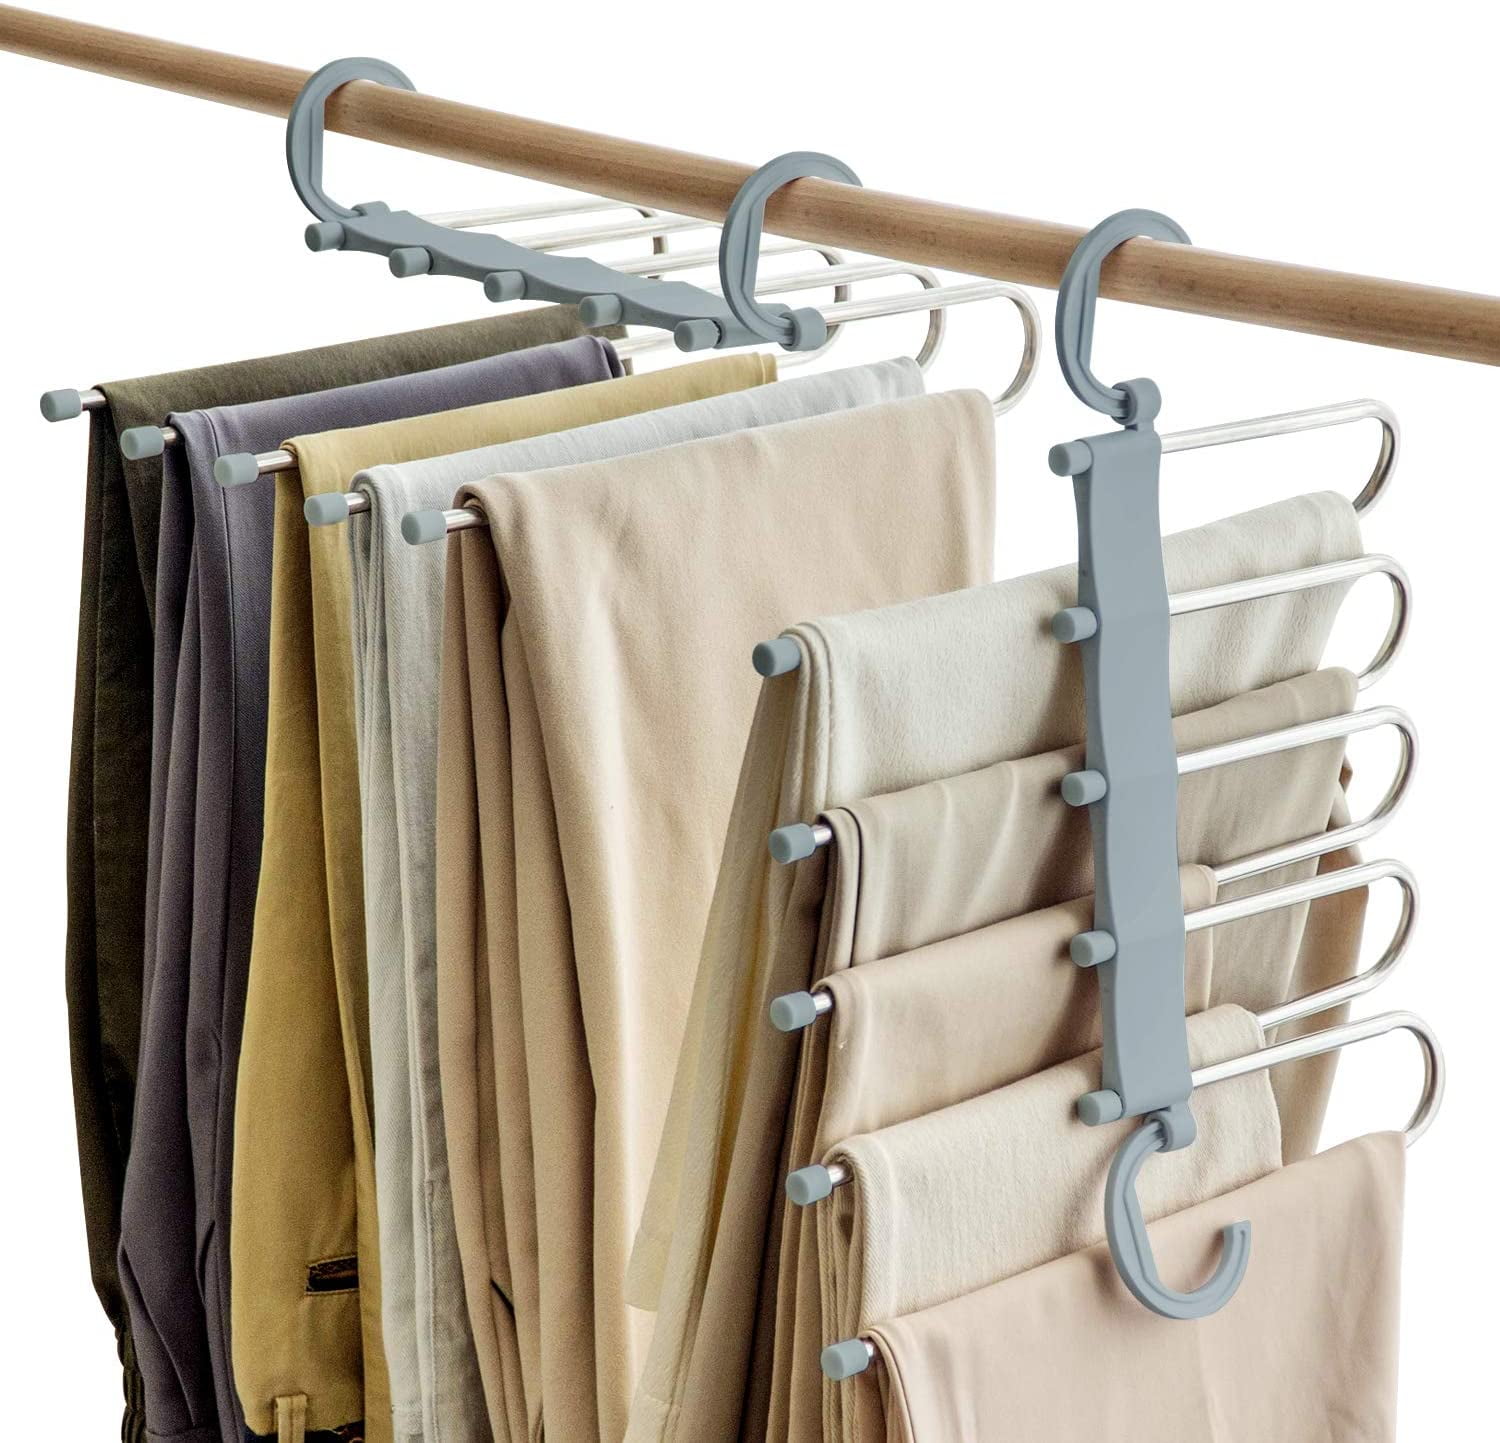 DOIOWN 6 Tier Skirt Hangers Pants Hangers Closet Organizer Stainless Steel Fold up Space Saving Hangers 2-Pieces